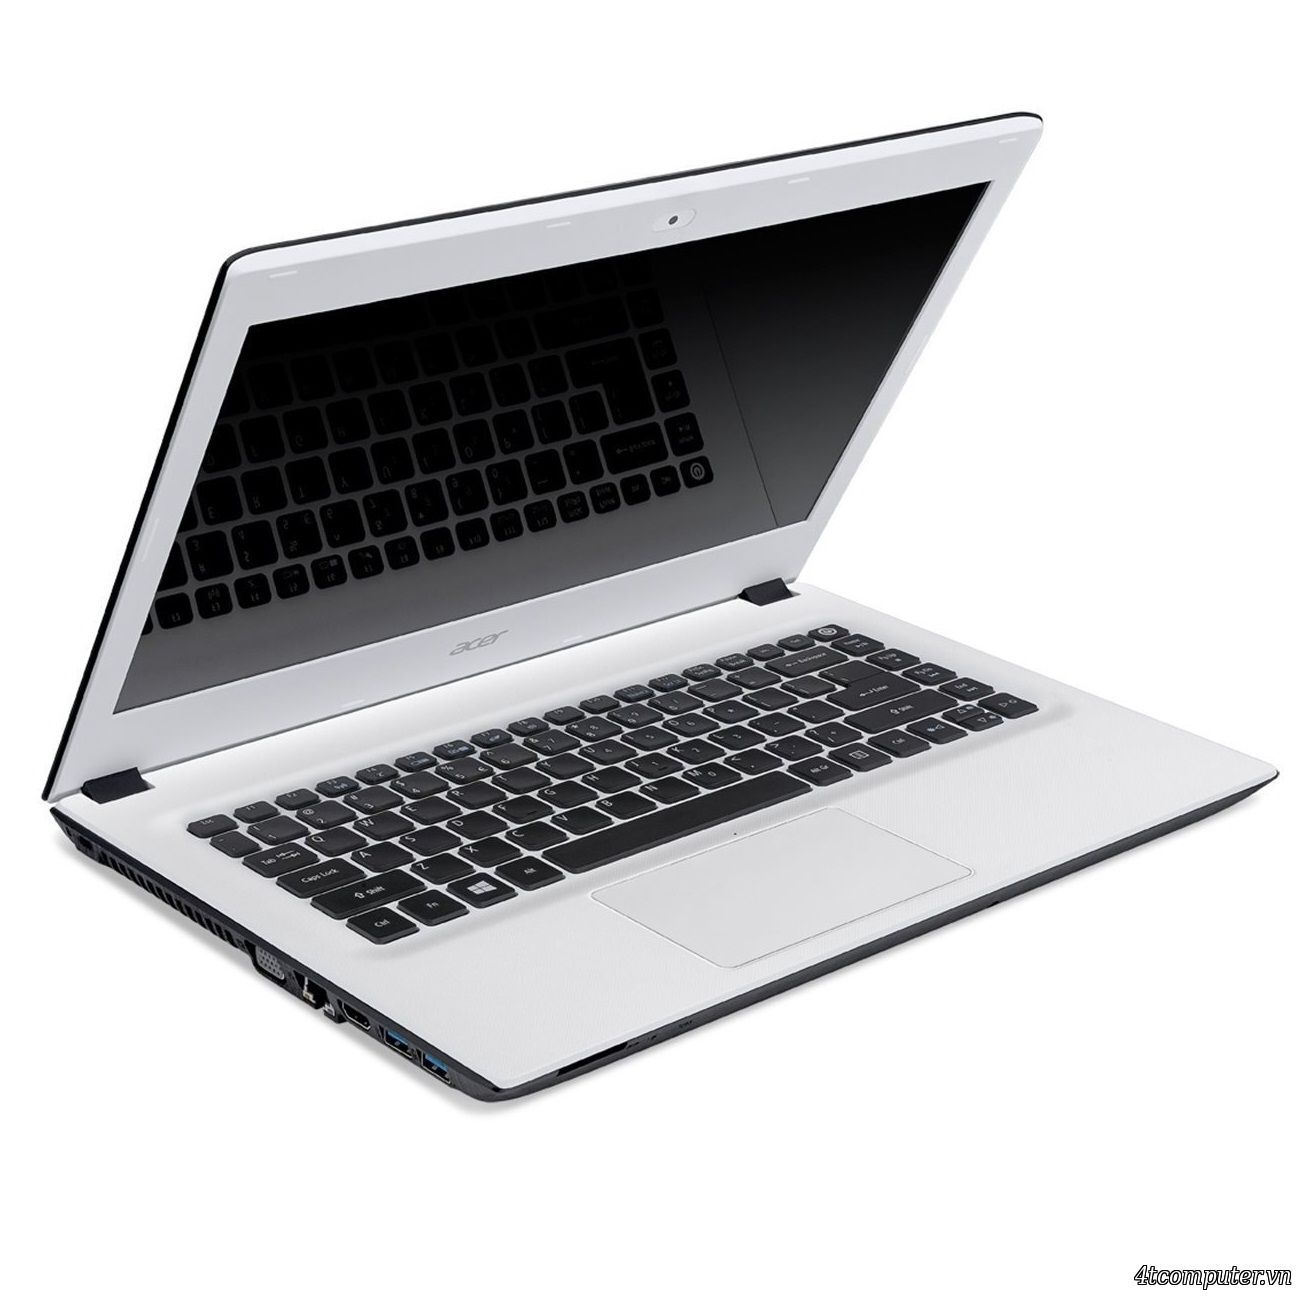 Laptop Acer E5-573-35YX - Intel Core i3 4005U 1.7Ghz, 4GB RAM, 500GB HDD, Intel HD Graphics, 15.6 Inch